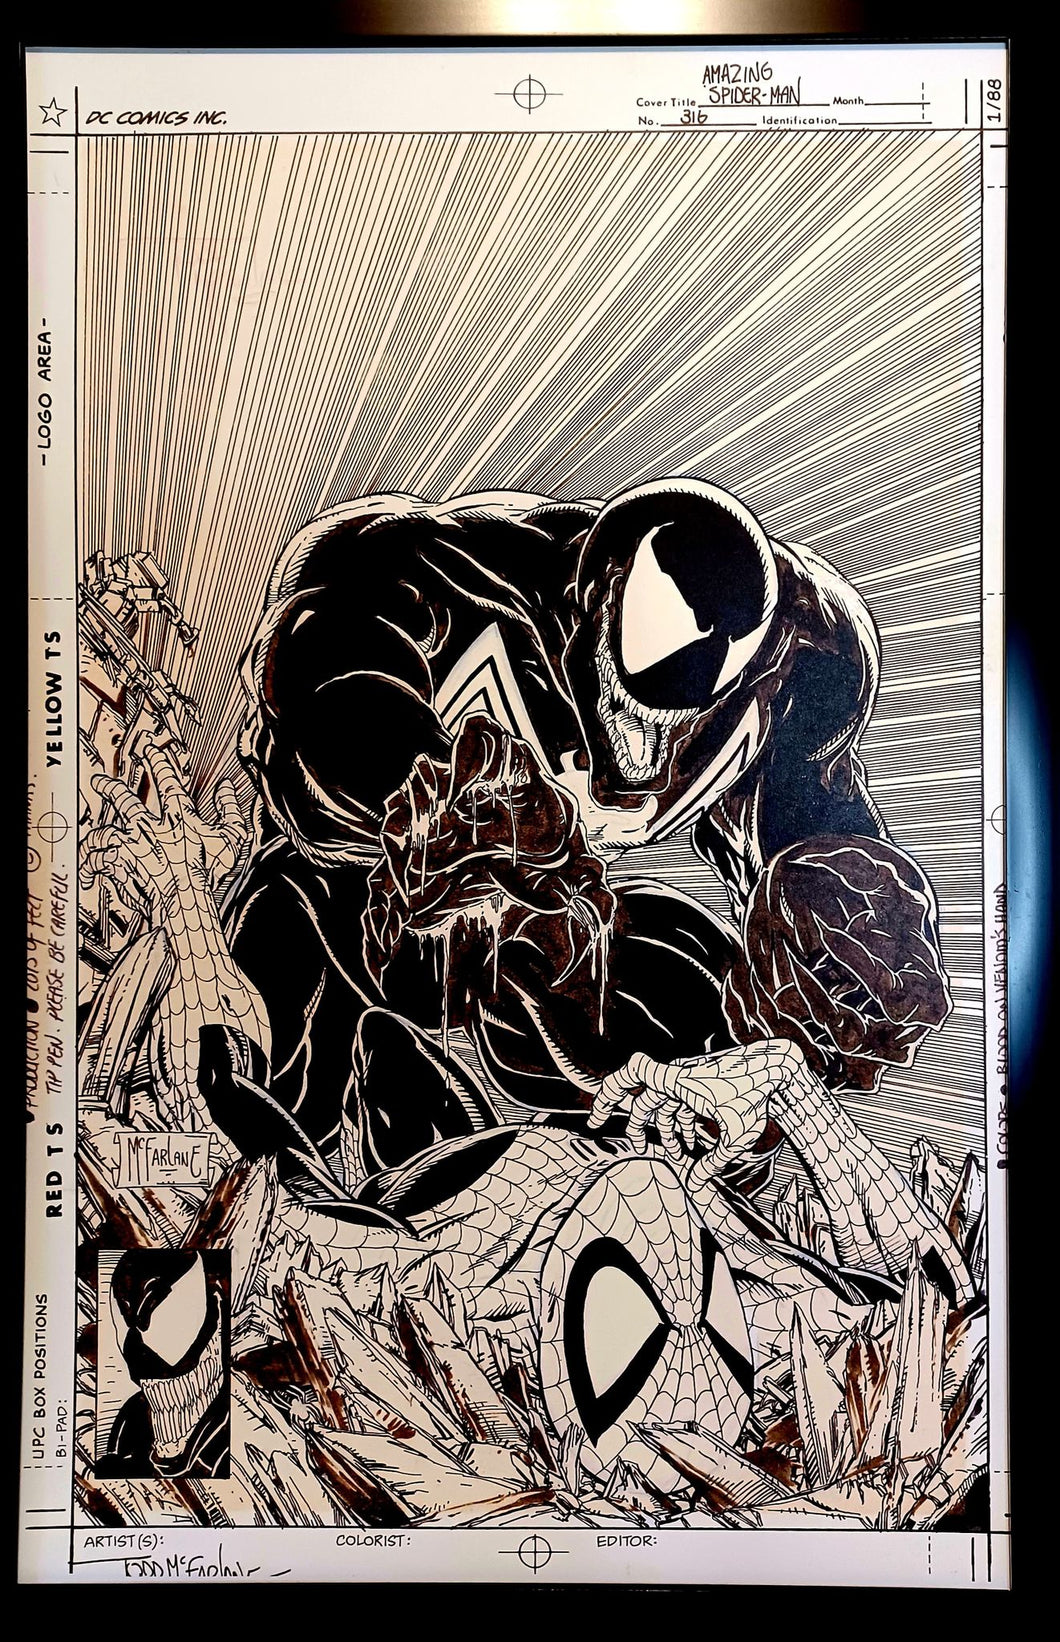 Amazing Spider-Man #316 by Todd McFarlane 11x17 FRAMED Original Art Print Comic Poster